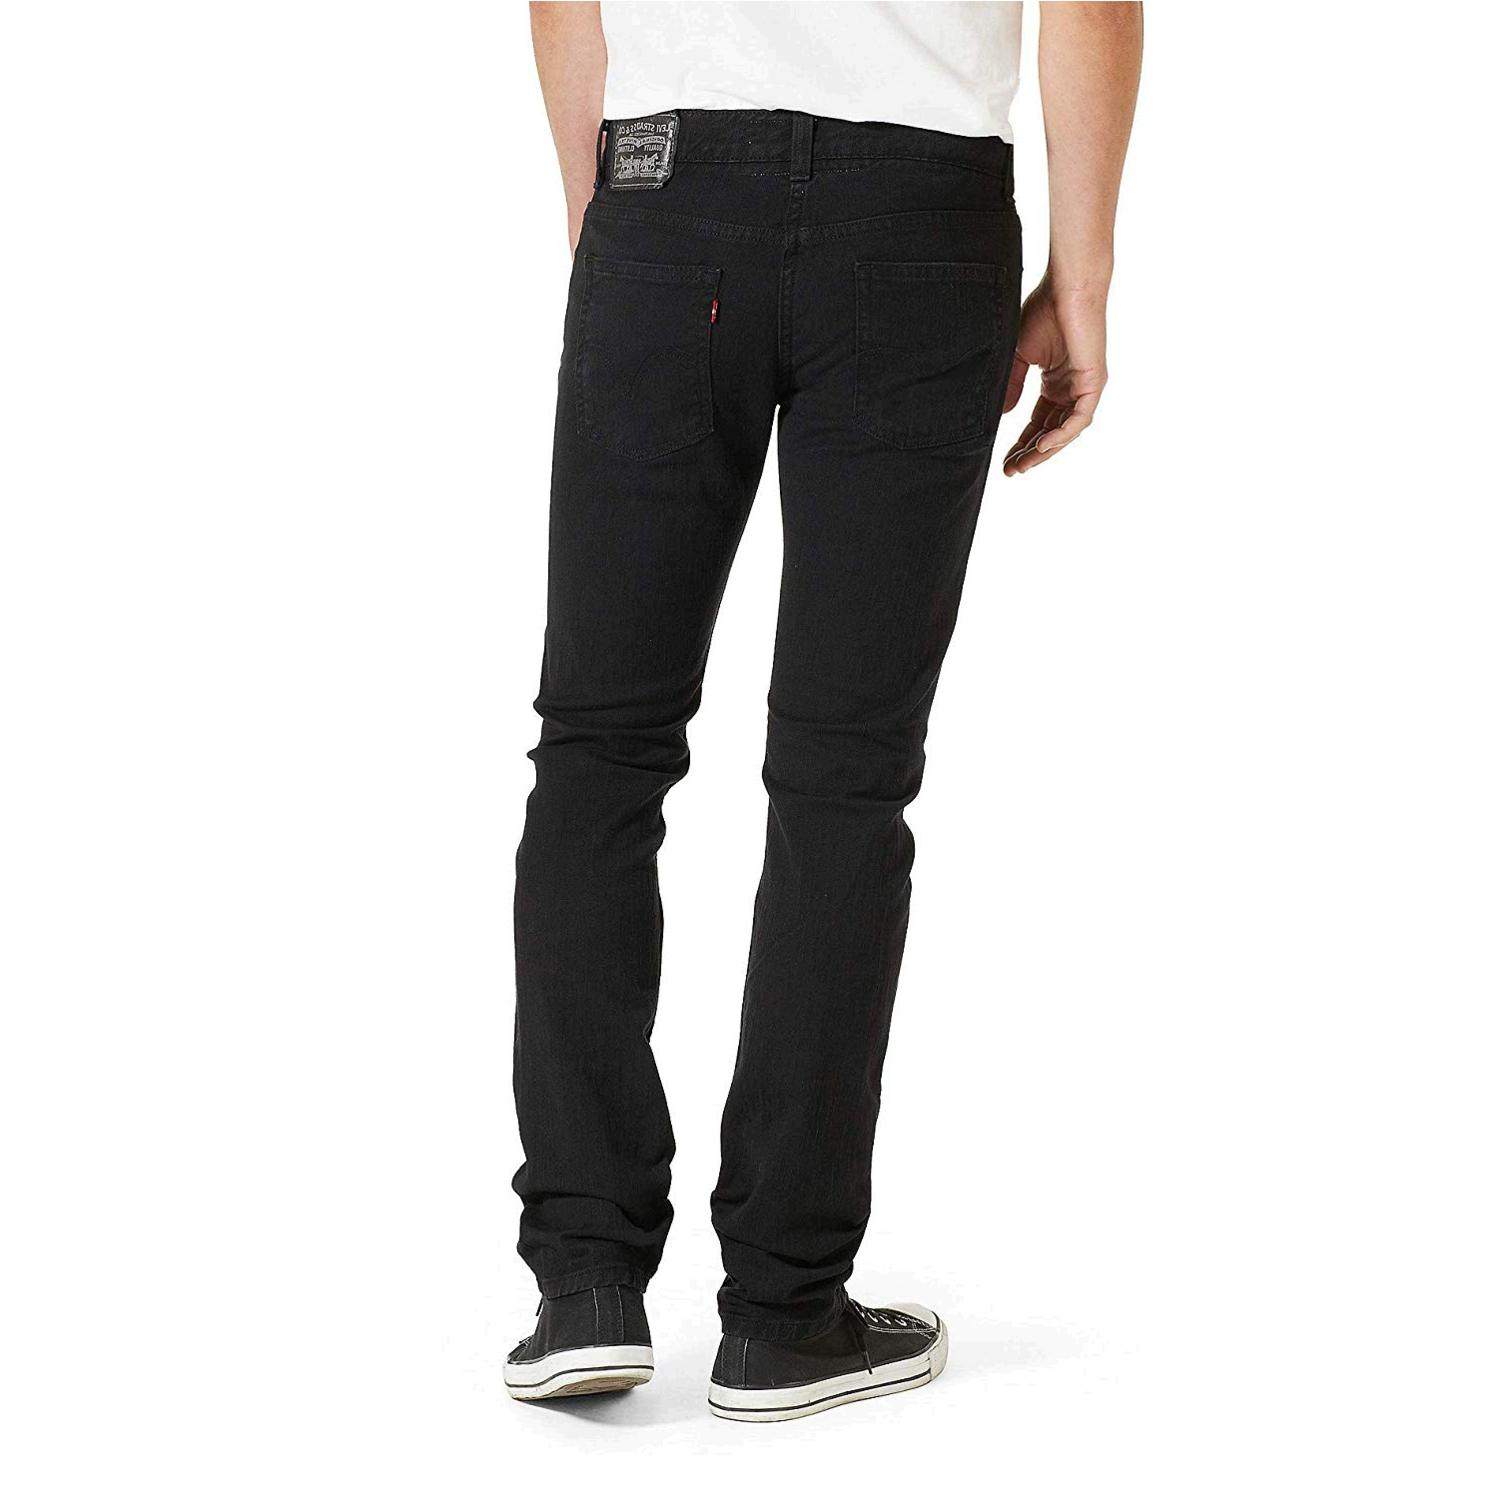 Levi's Men's 511 Slim Fit Jean, Black - Stretch, 29W x, Black, Size 29W ...